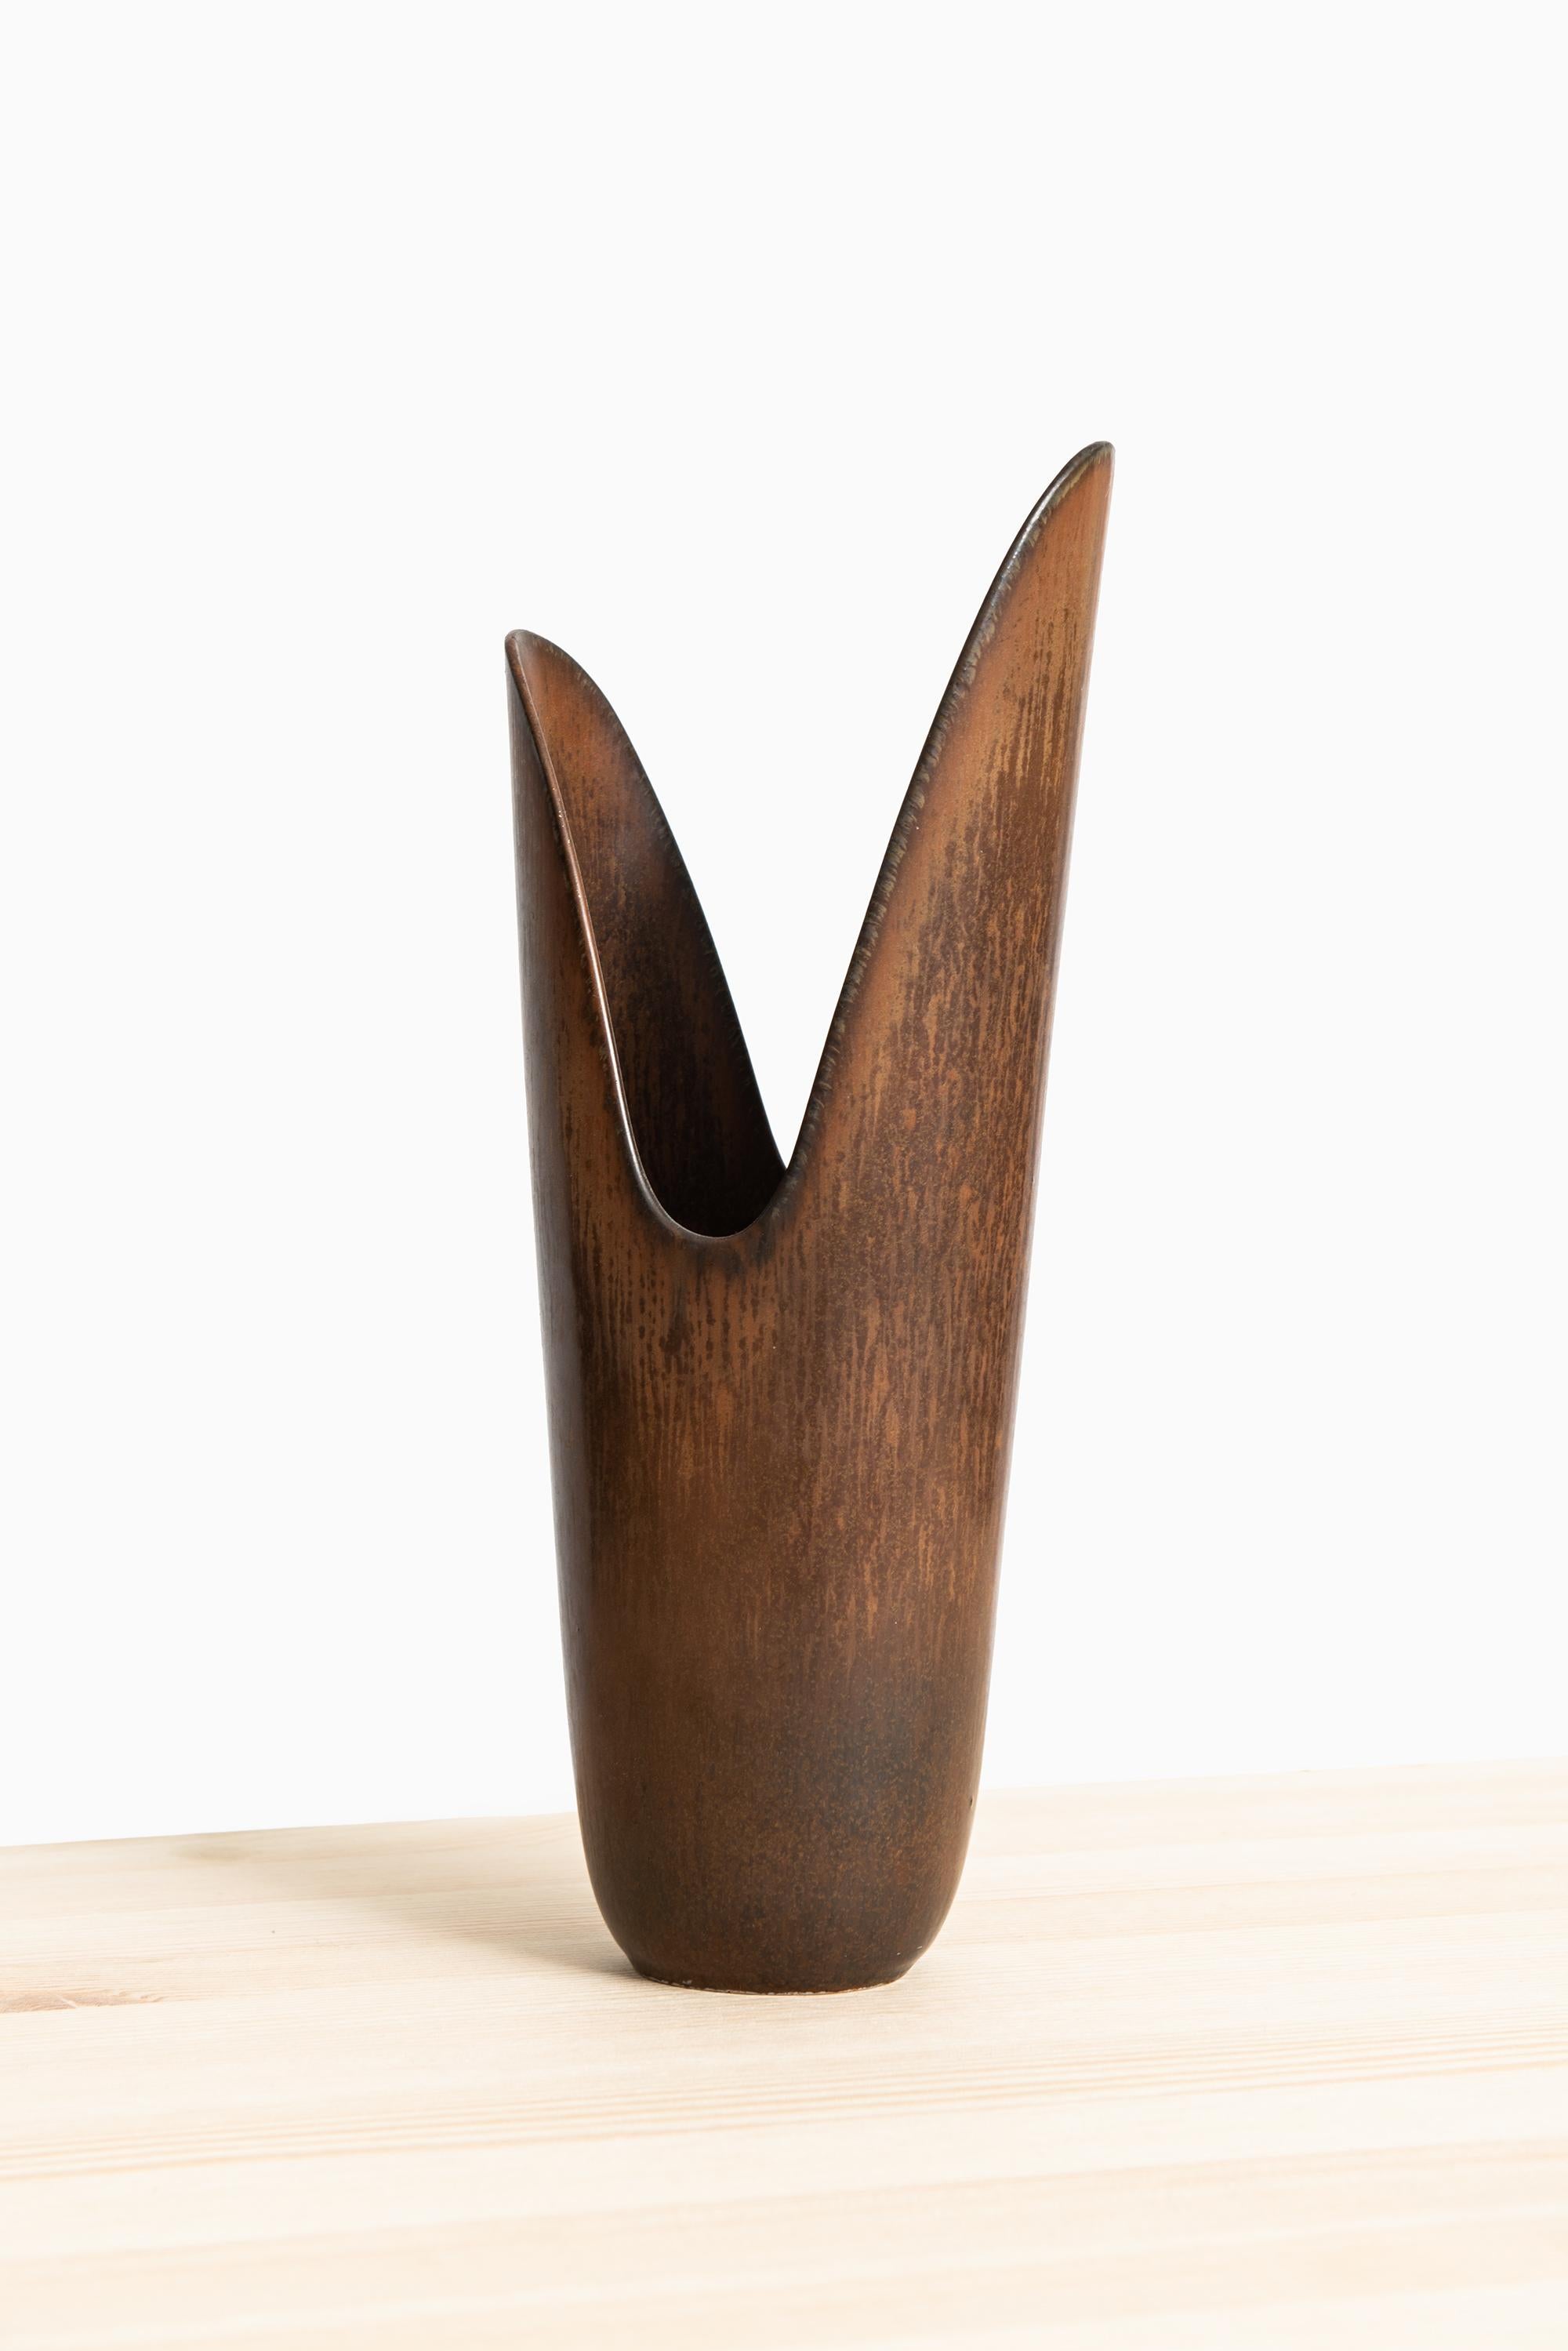 Ceramic vase model ARZ designed by Gunnar Nylund. Produced by Rörstrand in Sweden.